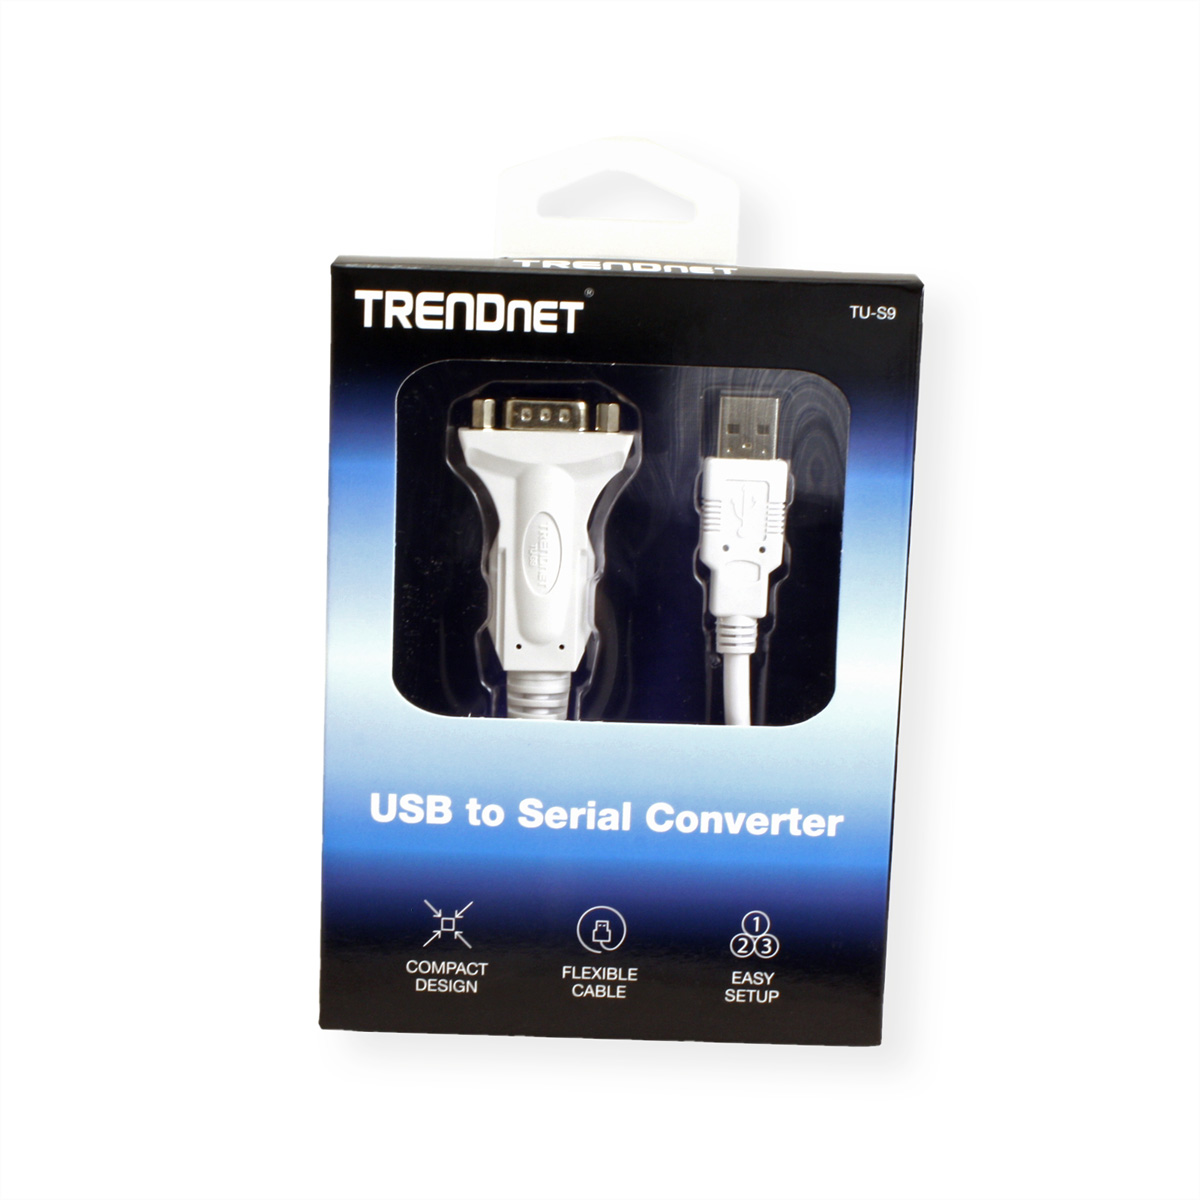 TRENDNET TU-S9 USB zu Serial Converter USB-zu-Seriell Konverter